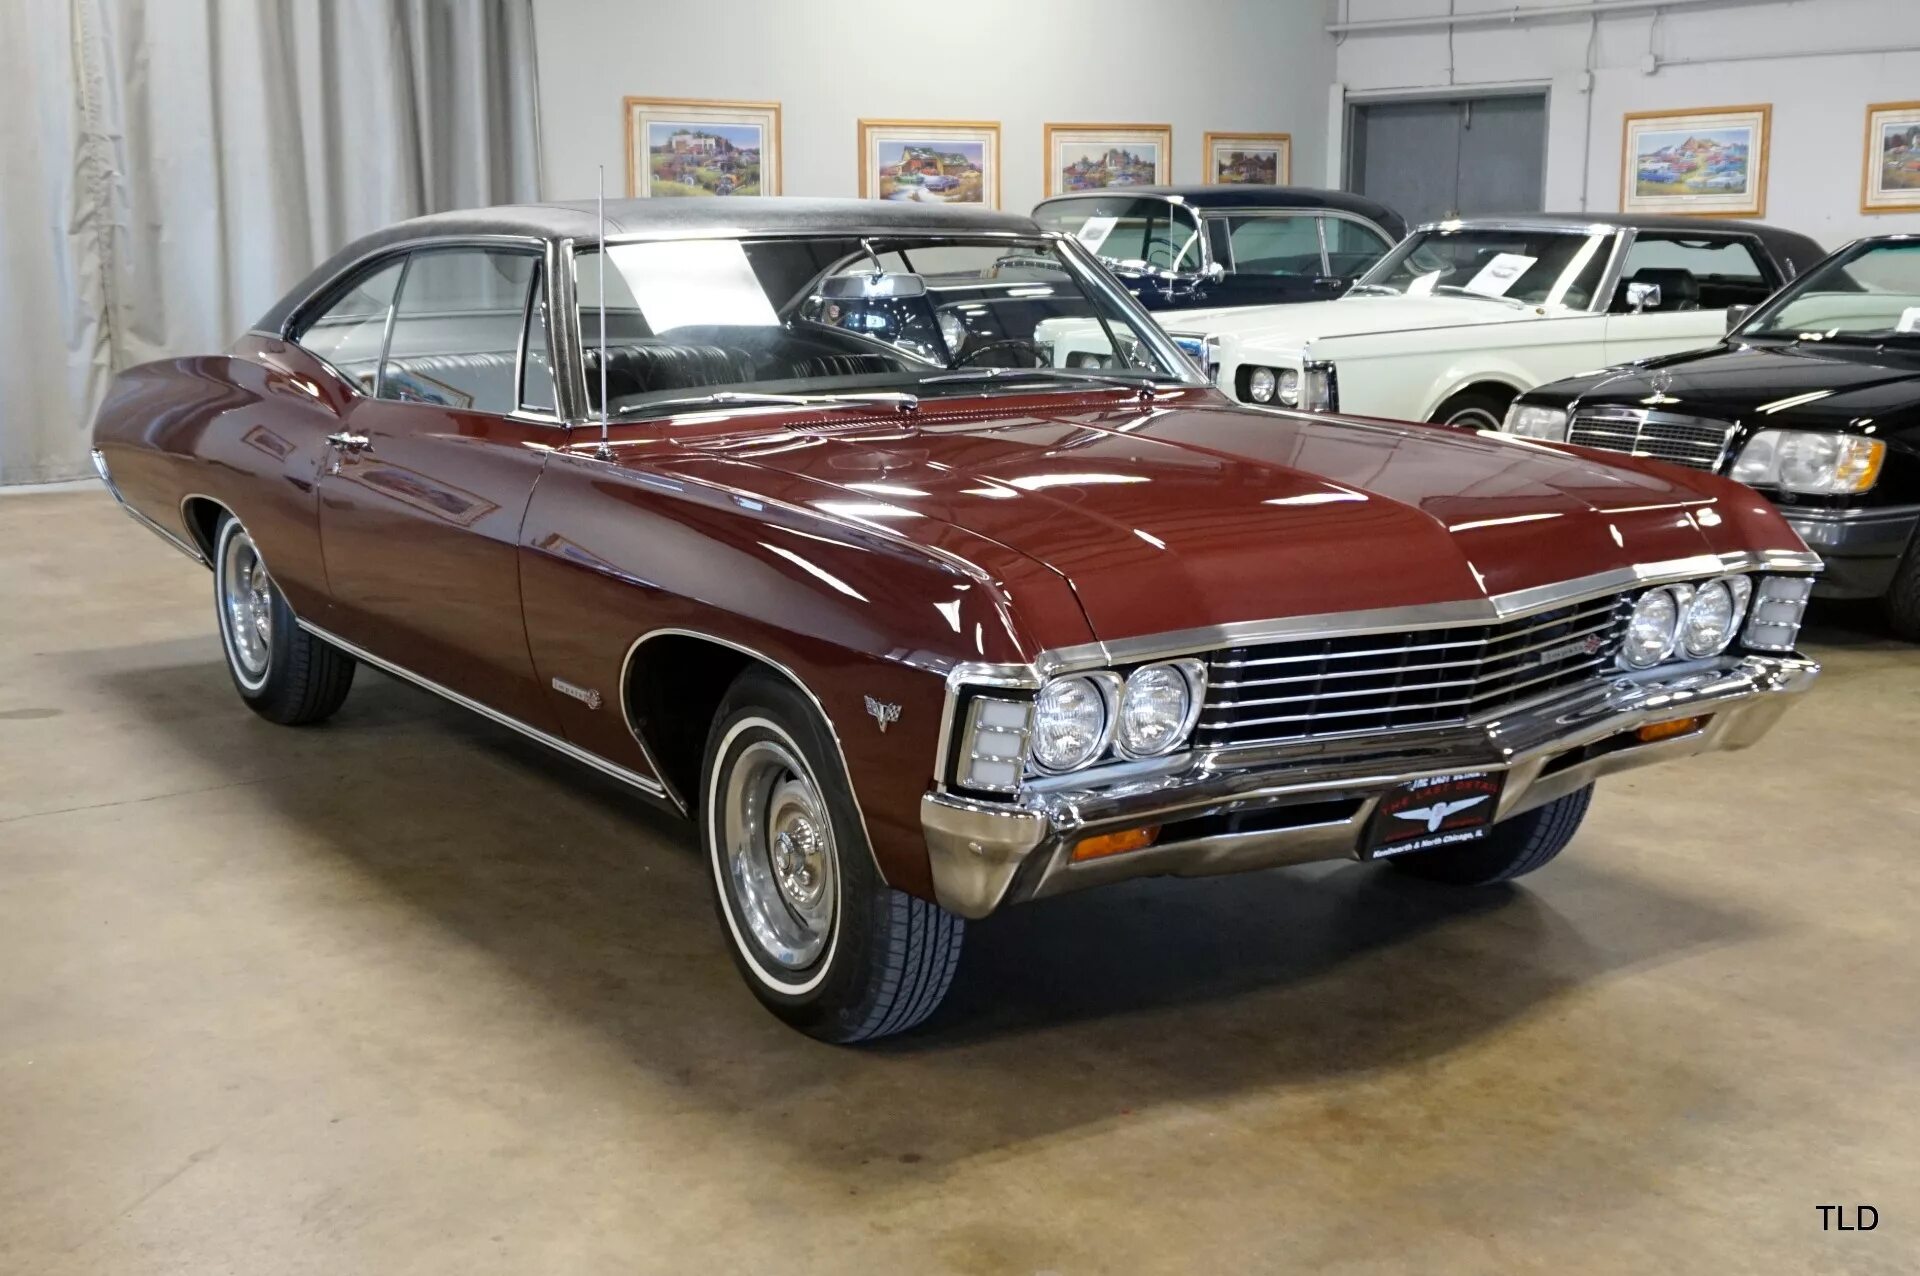 Chevrolet Impala 1967. Шевроле Импала 1967 седан. Ford Impala 1967. Шевроле Ипанема 1967.